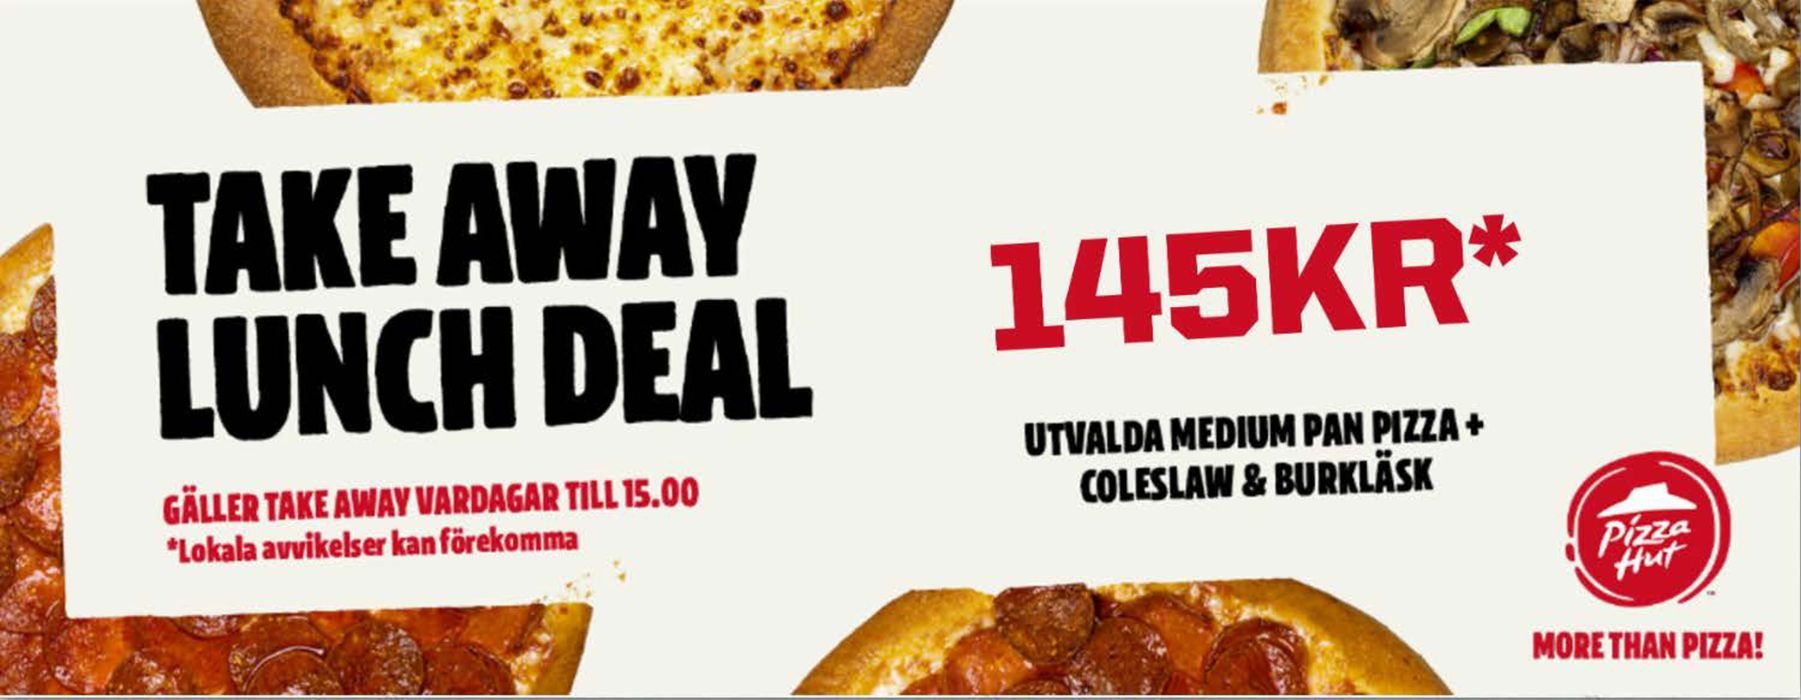 Pizza Hut-katalog i Linköping | Nya pizzor på lunchbuffen ! | 2024-05-15 - 2024-05-31